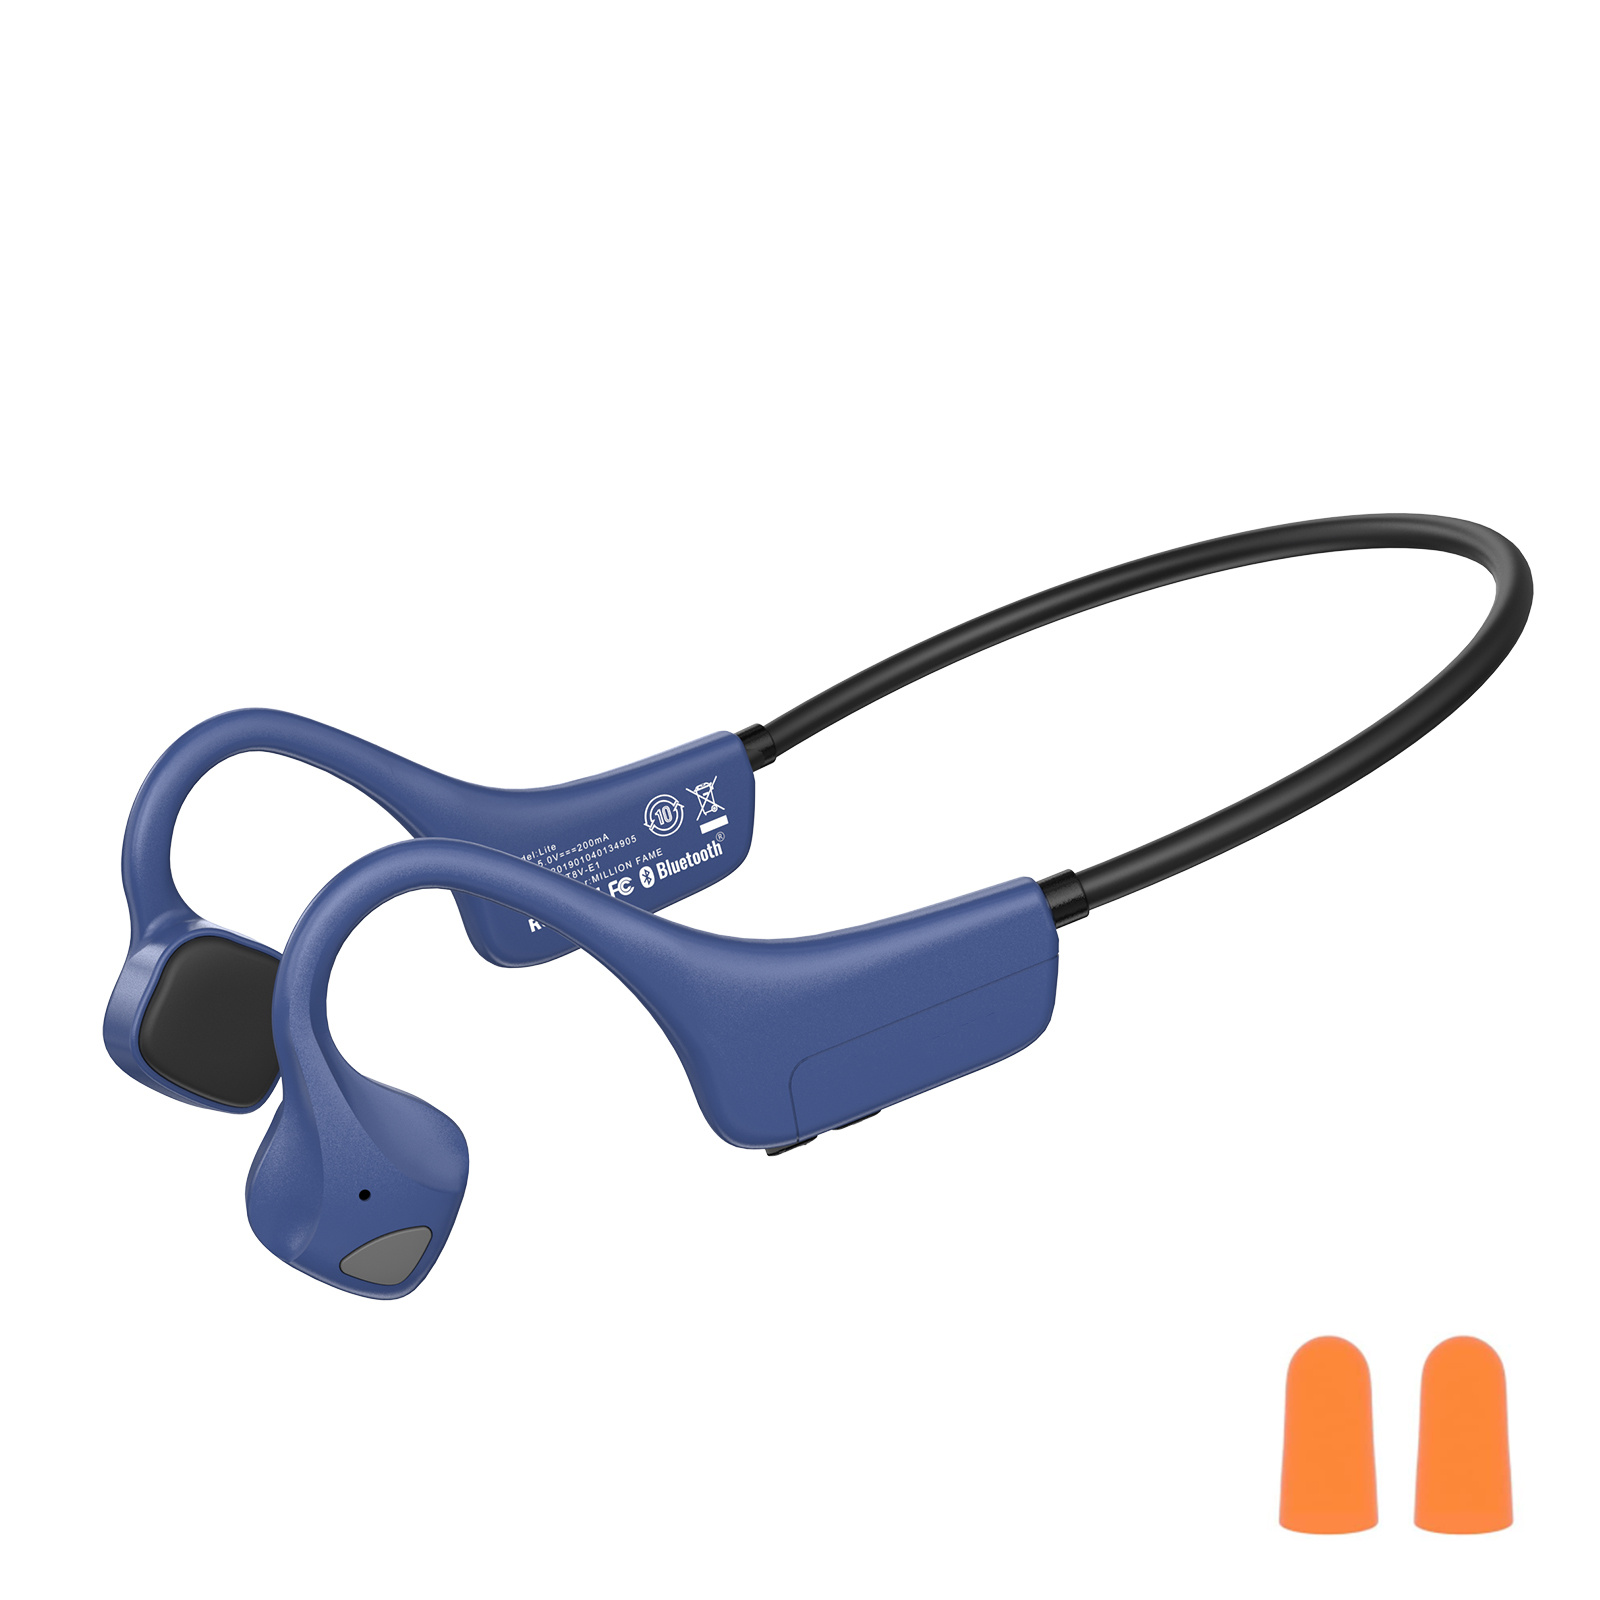 Bone Conduction Headphones Bluetooth, Wireless Open Ear Headphones Waterproof with Mic, Sweatproof Earphones, 9 DIGITAL Sport Headset for Running Cycling, Gym, Biking, Workouts, Hiking & Climbing